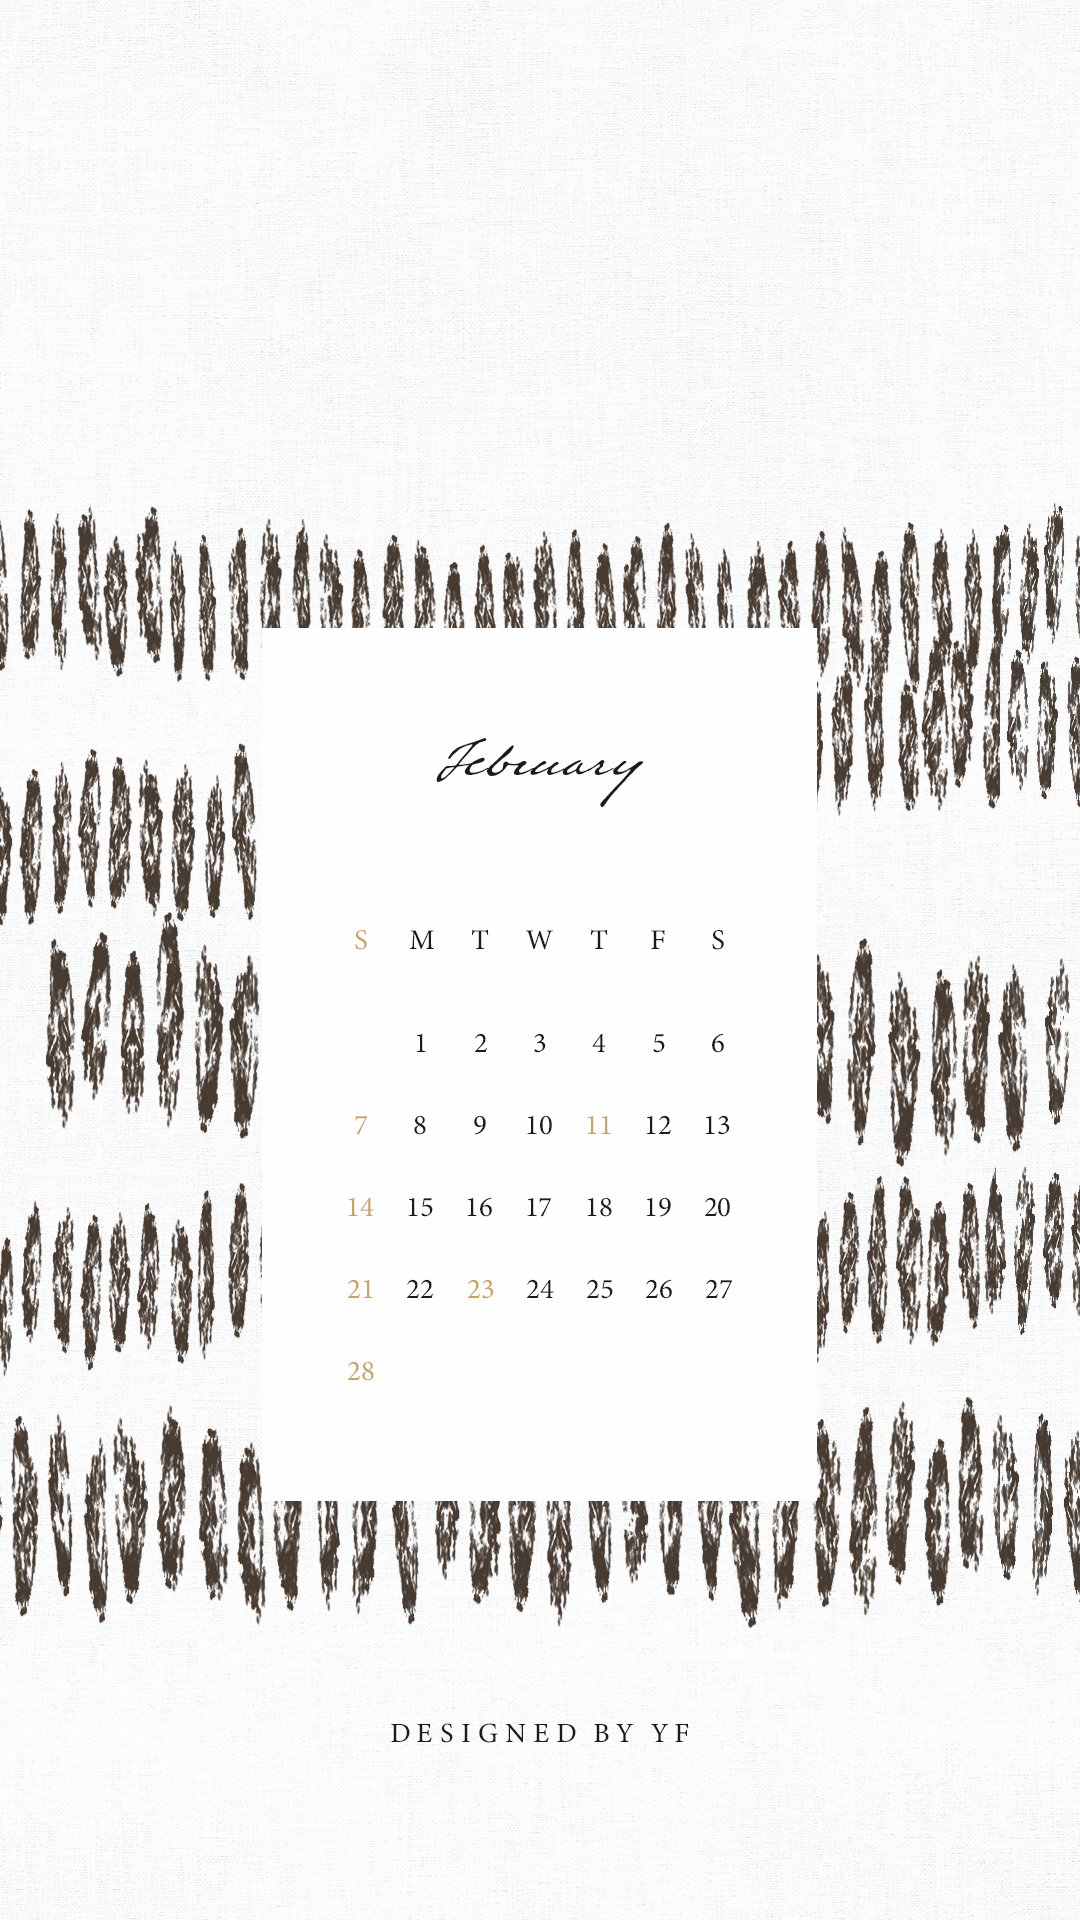 February 21 Calendar Wallpaper For The Iphone Design By Yf